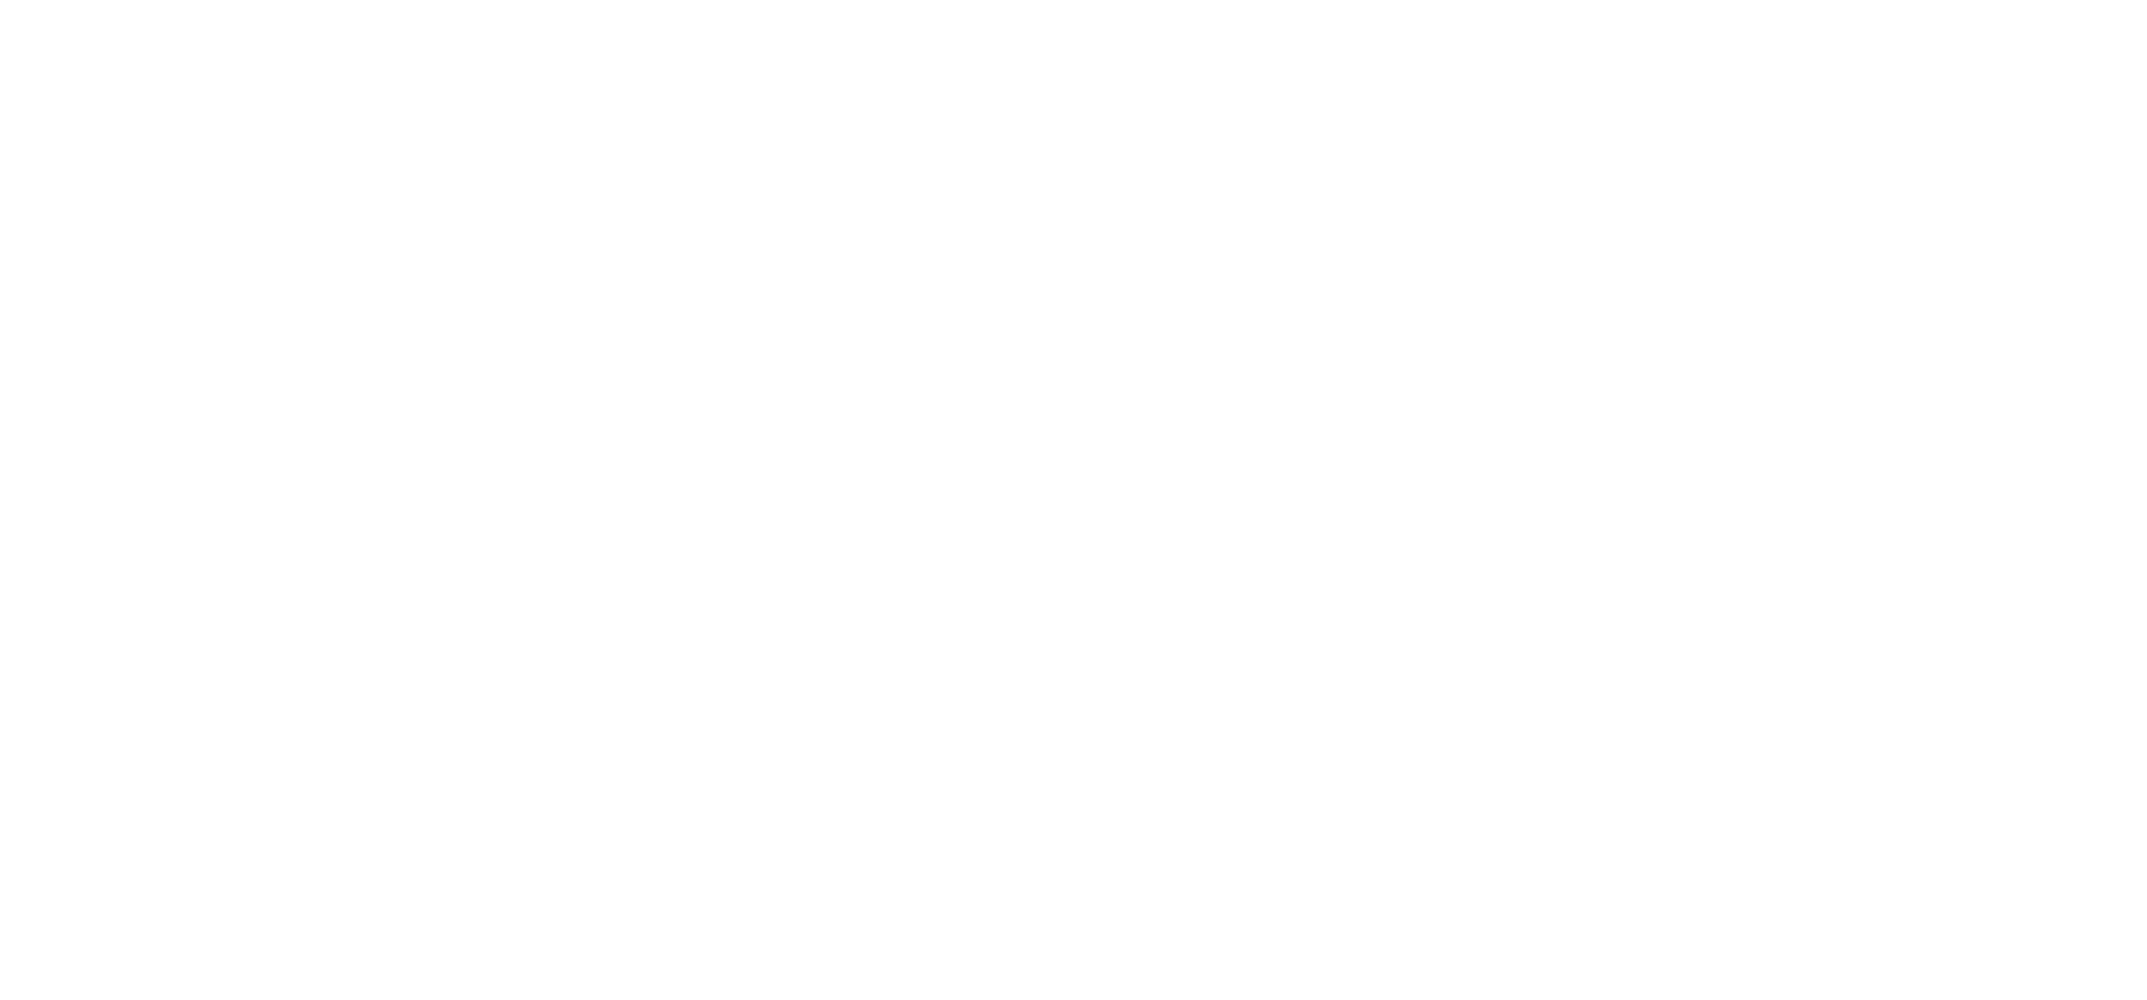 Deep Knowledge Group